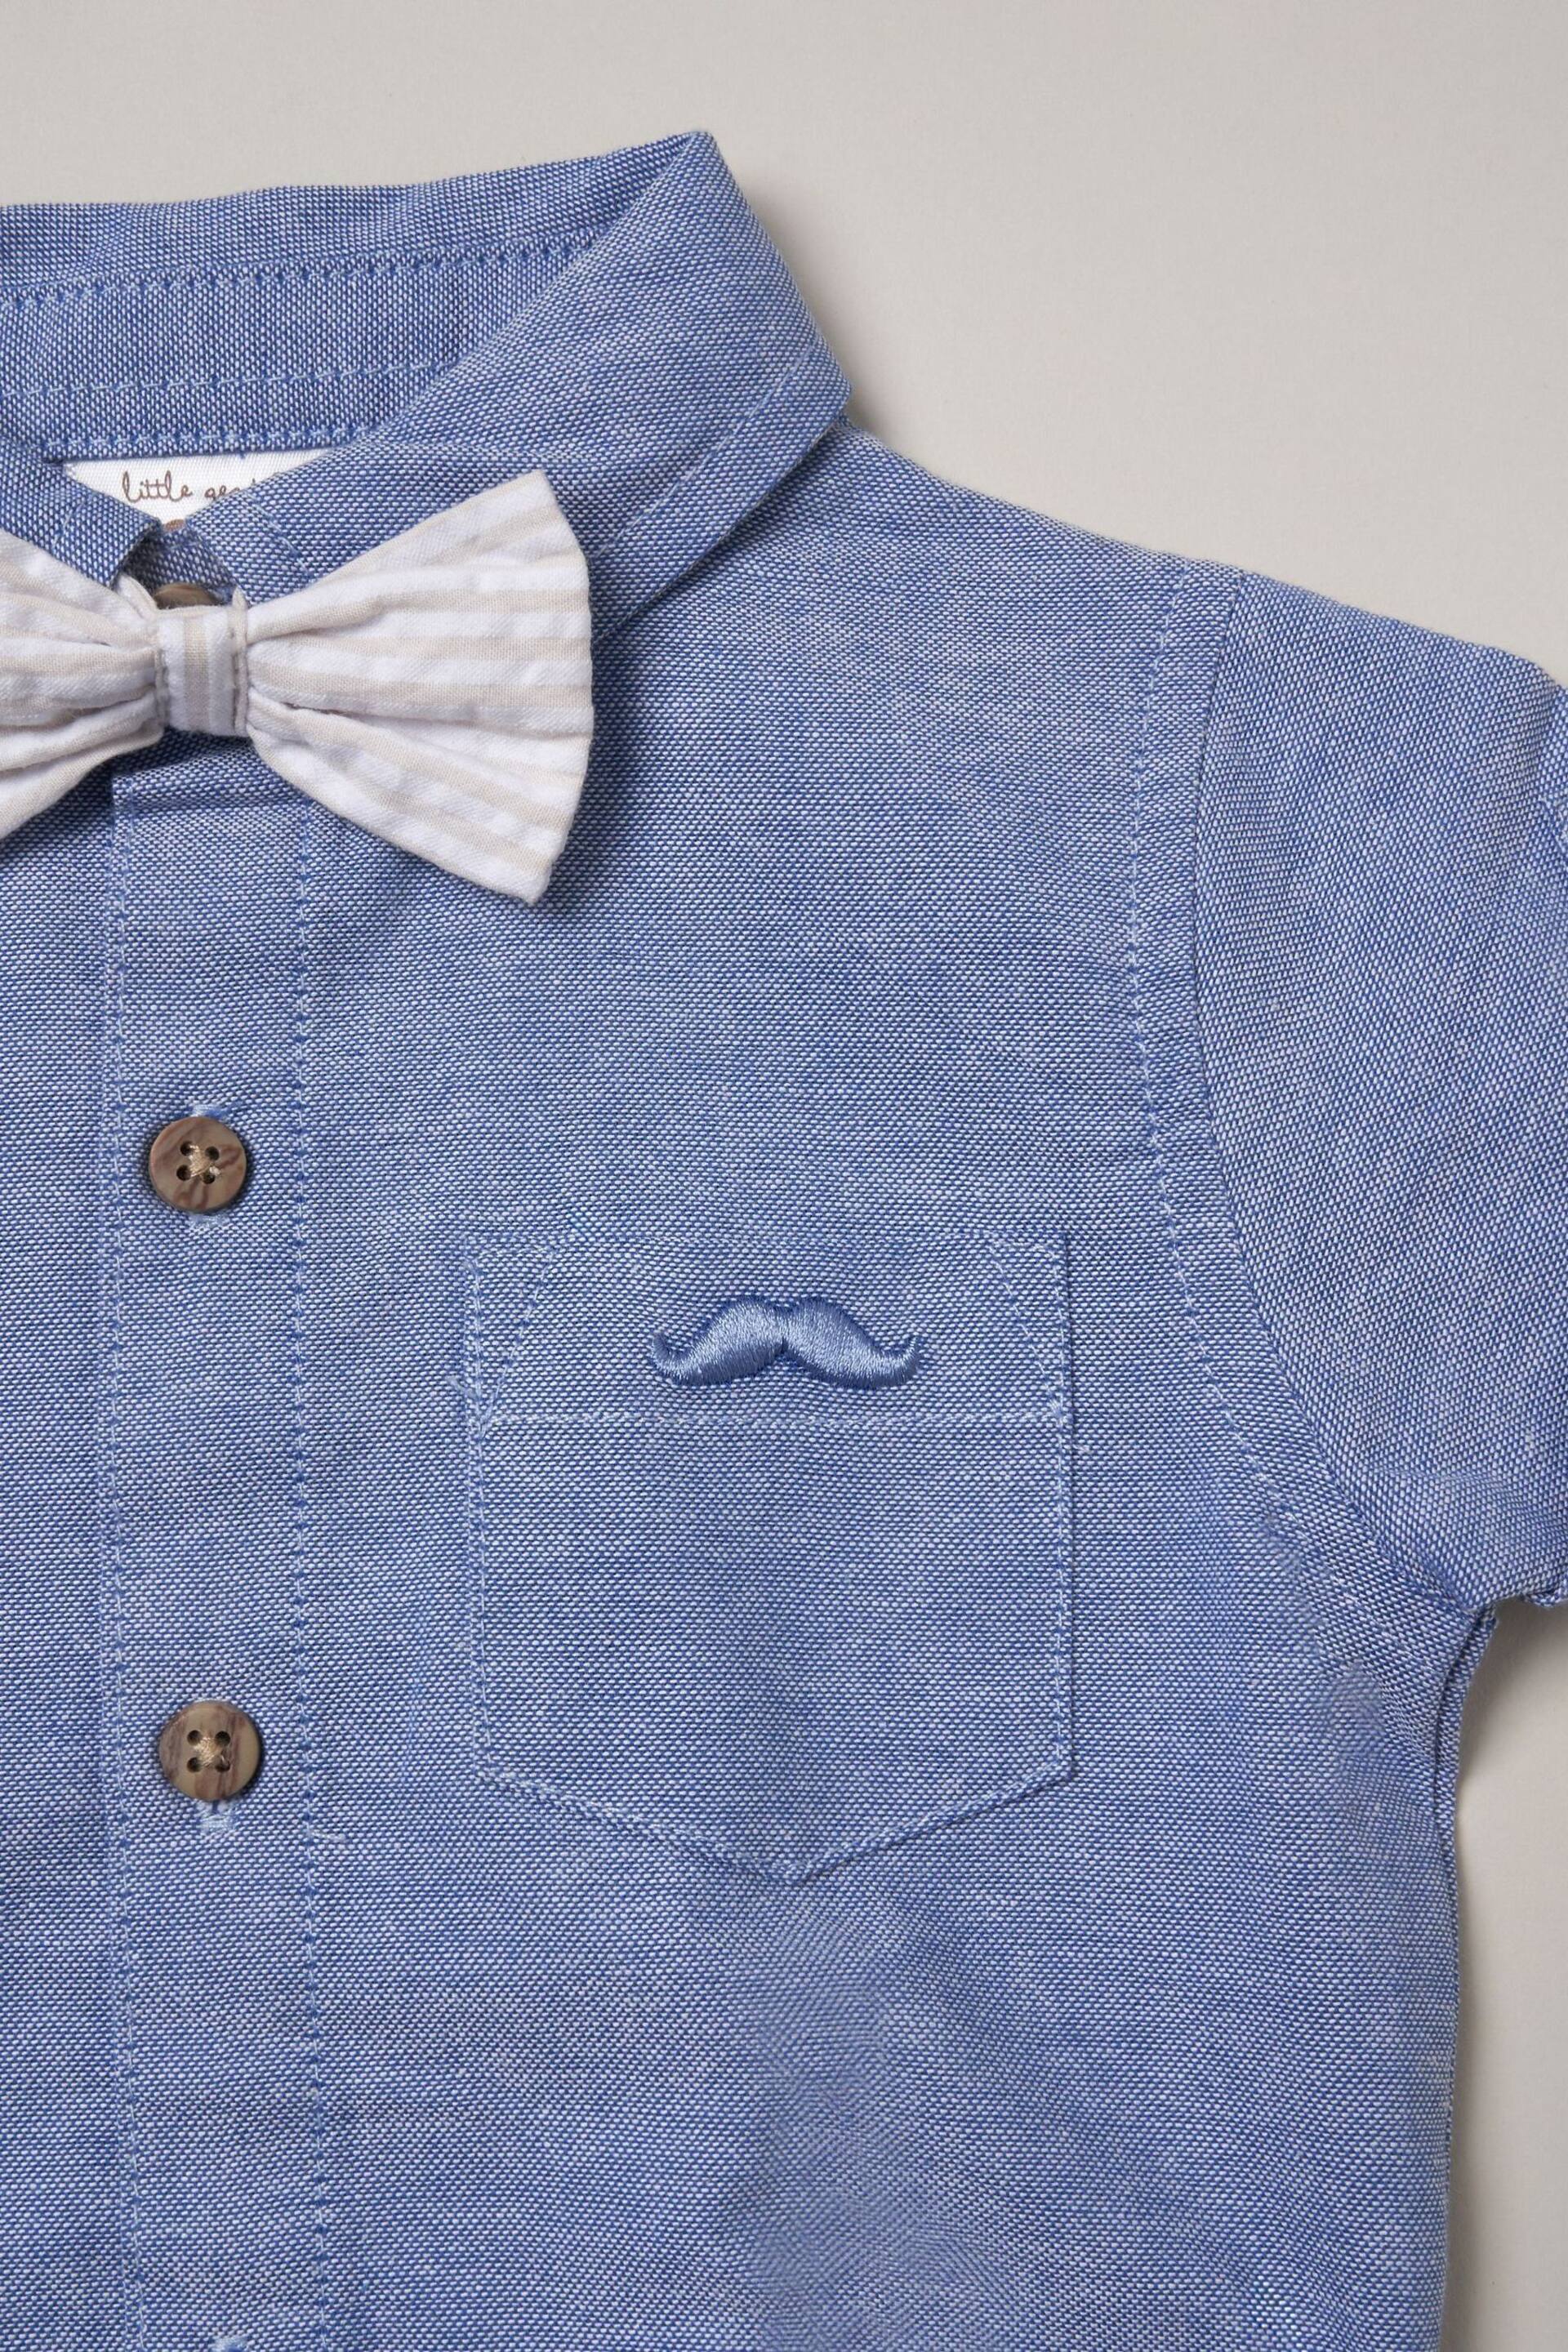 Little Gent Blue Shirt Bodysuit Bowtie Shirt and Short Set - Image 4 of 4